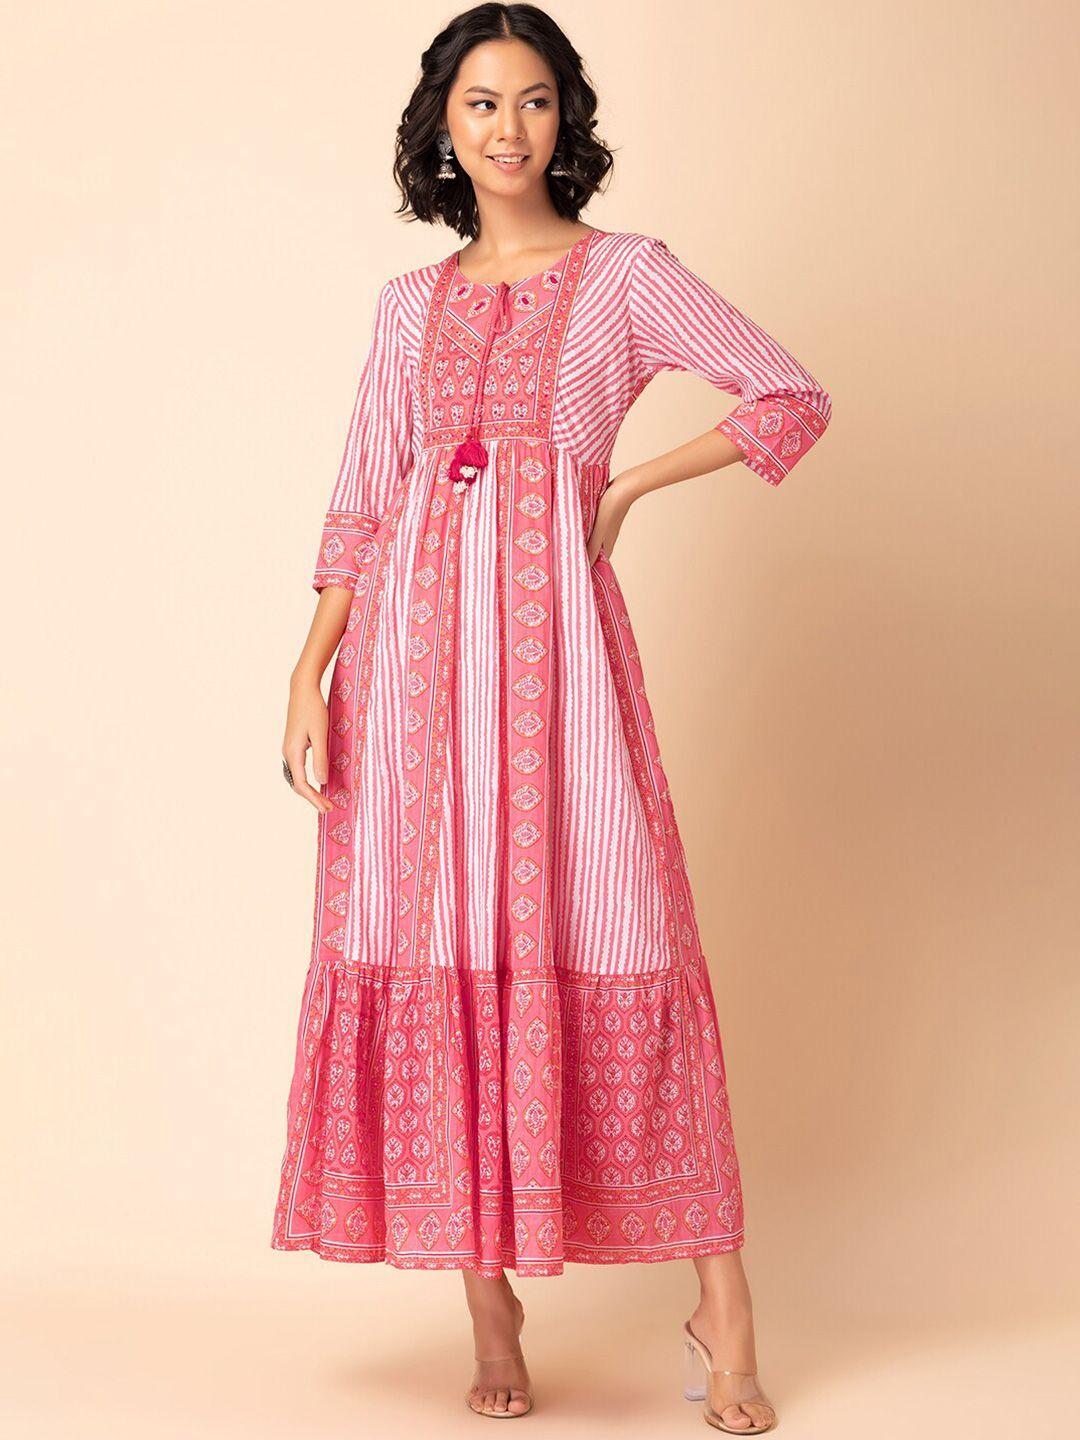 rang-by-indya-ethnic-motif-printed-cotton-ethnic-dress